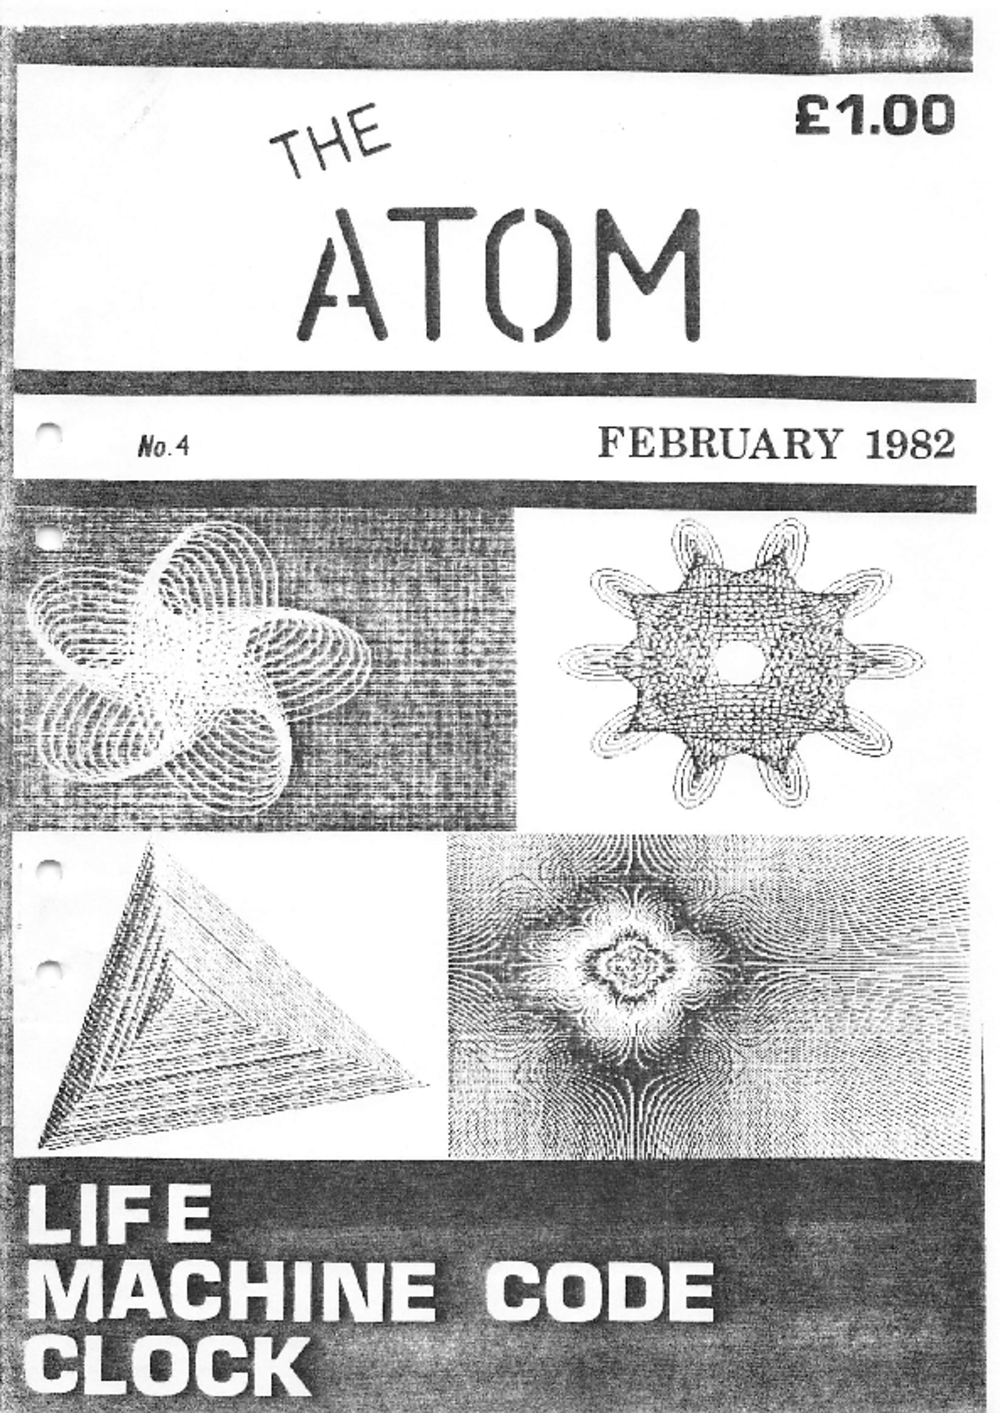 Article: The Atom - February 1982 - No 4